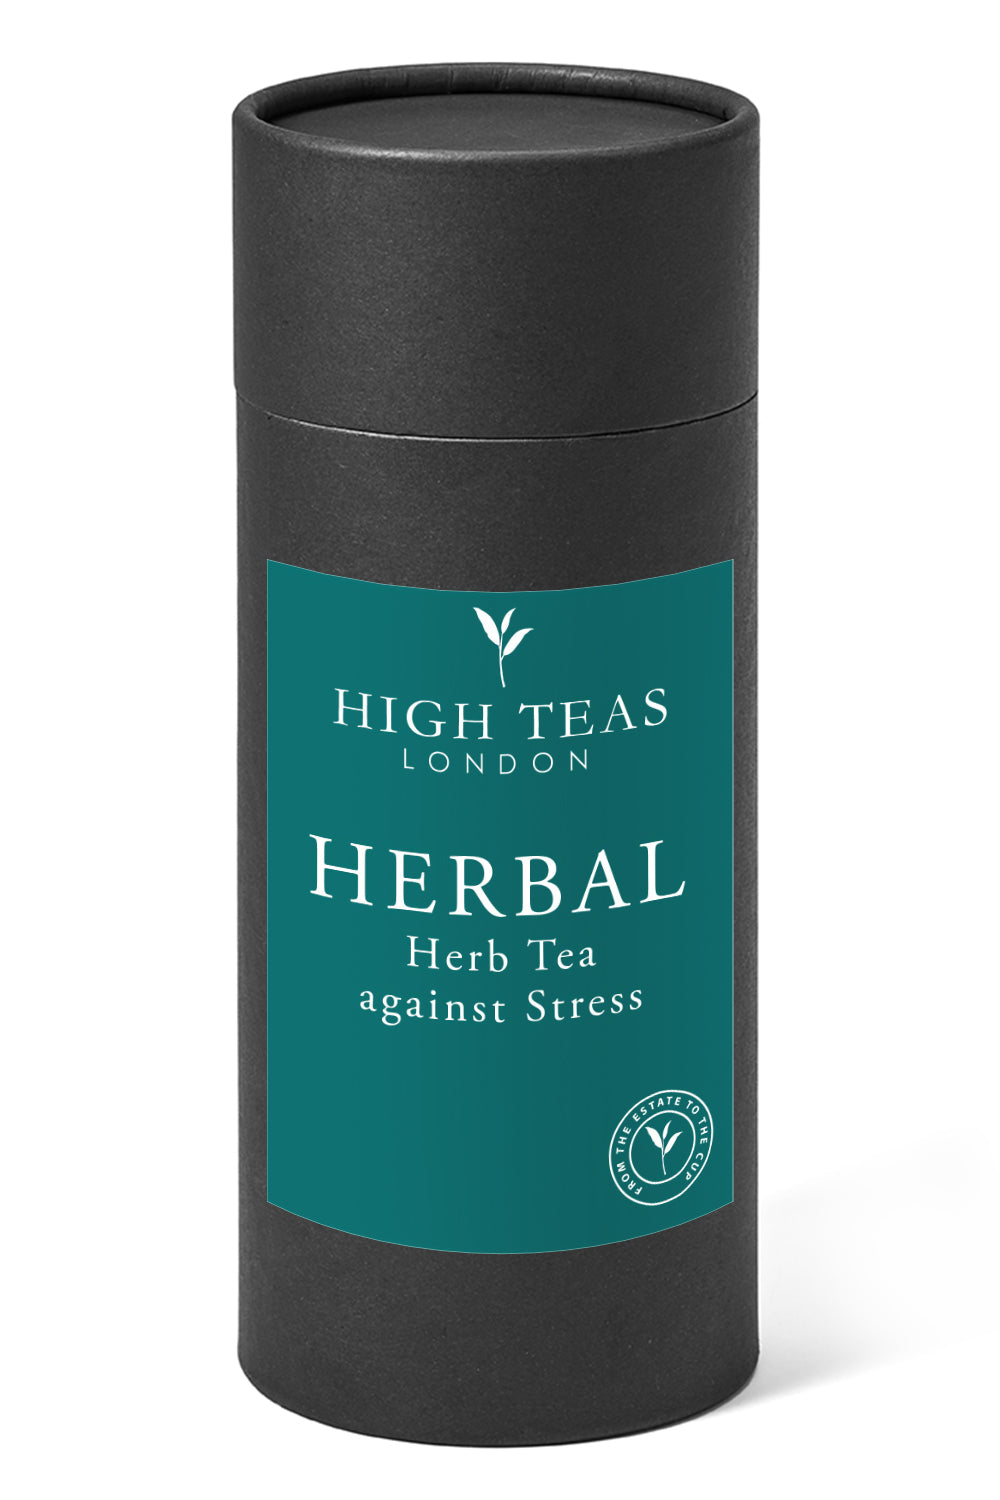 Herb Tea against Stress - Vata supports the Dosha "VATA"-150g gift-Loose Leaf Tea-High Teas